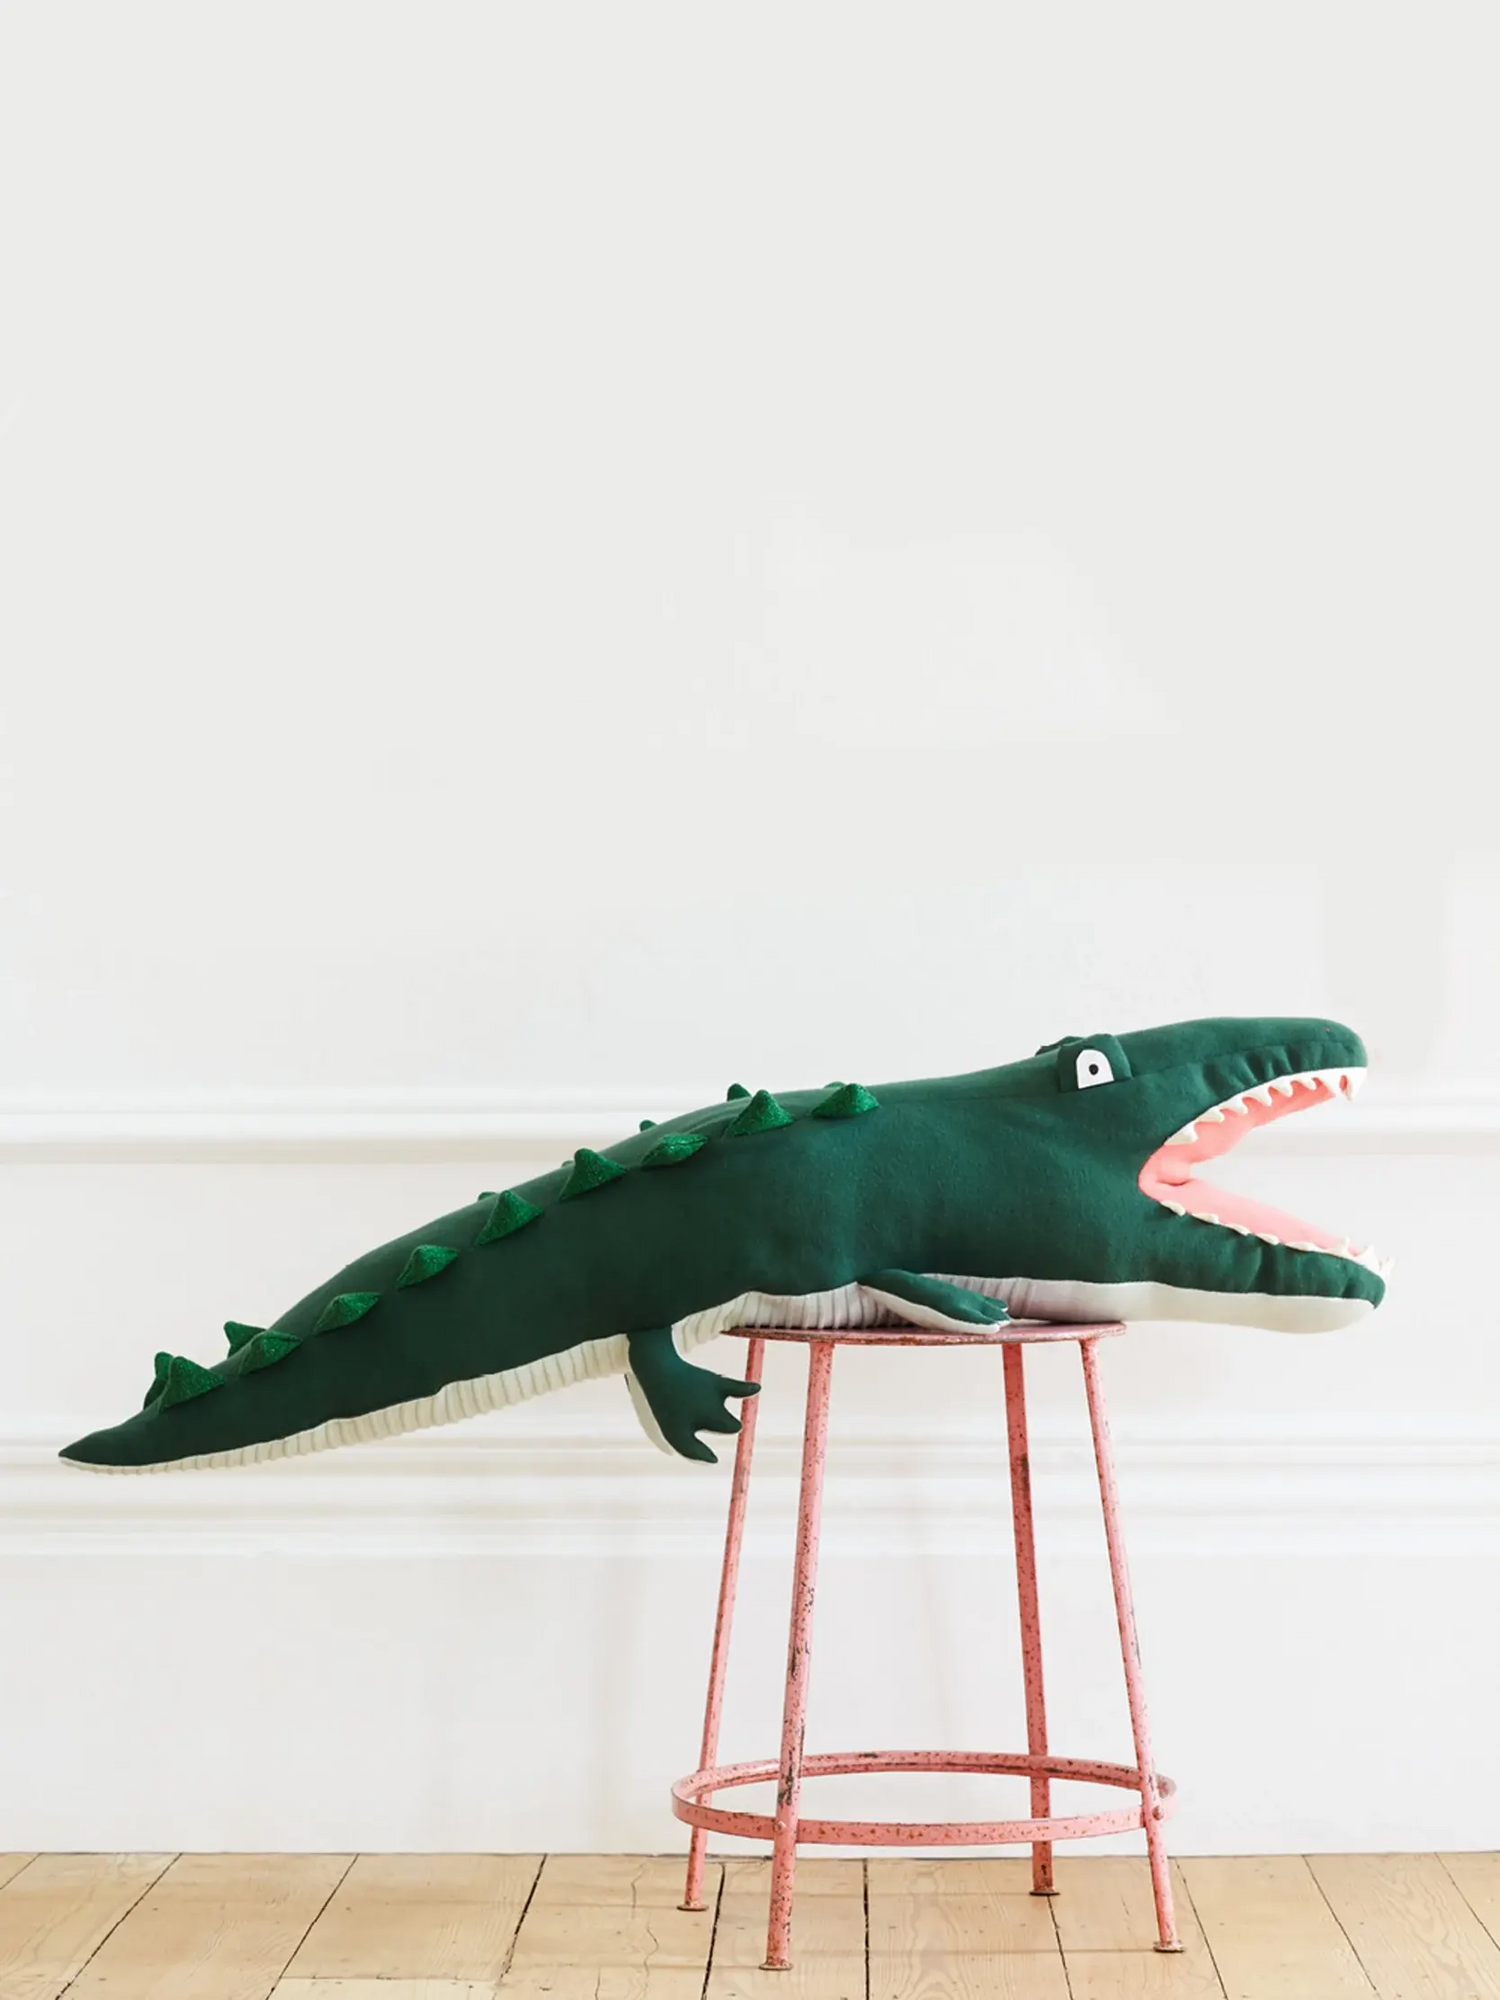 Jeremy Crocodile, large toy